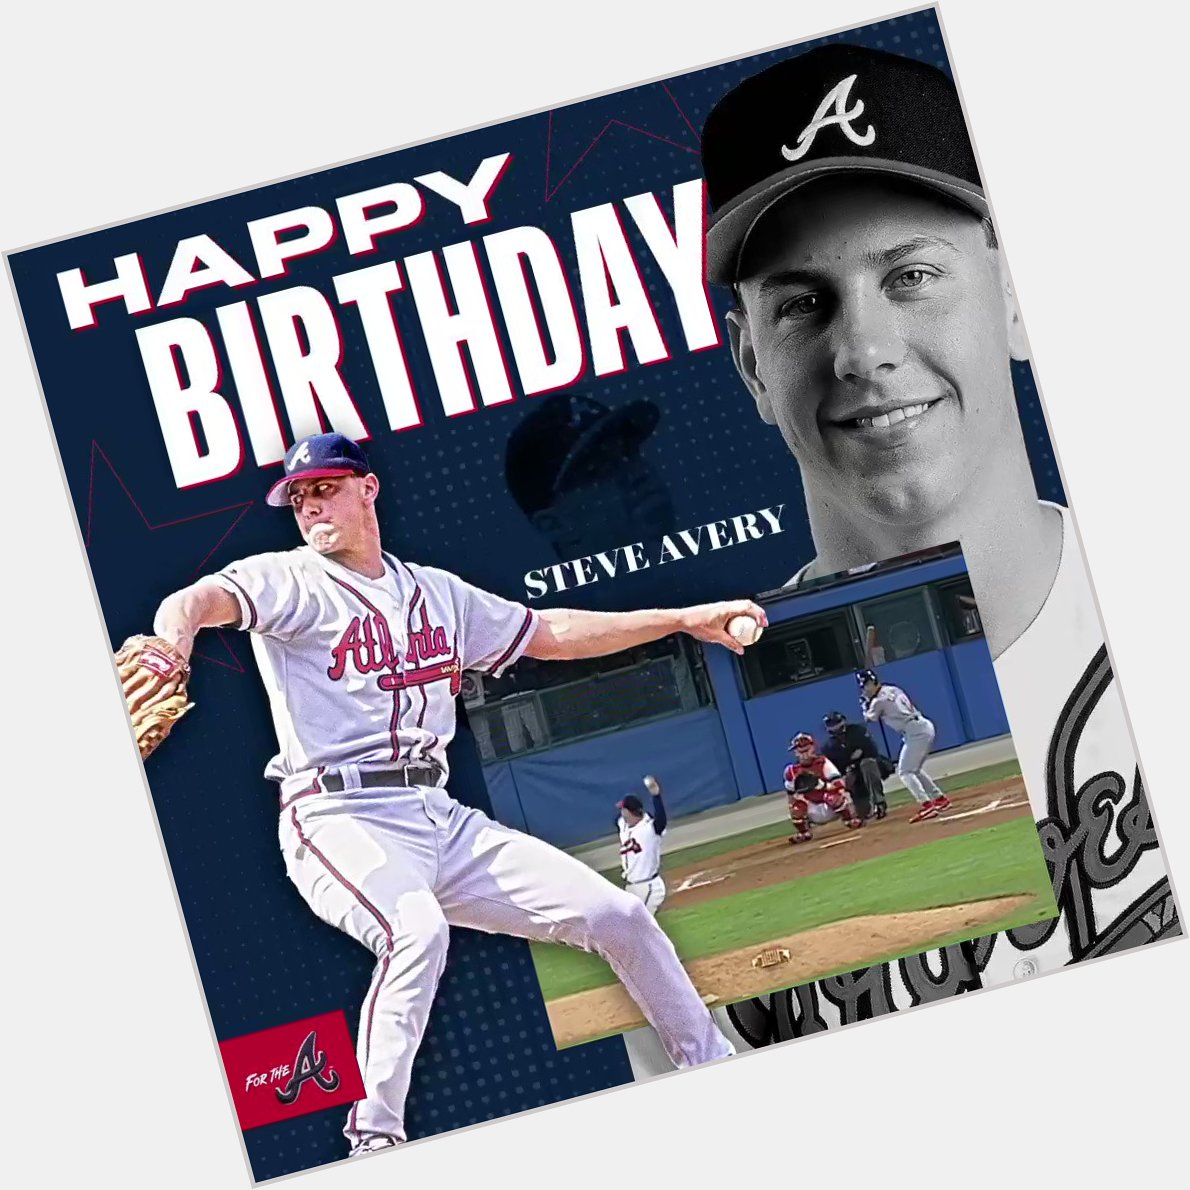     Happy Birthday to one of my favorite Braves!!  Happy Birthday to Braves legend Steve Avery! 